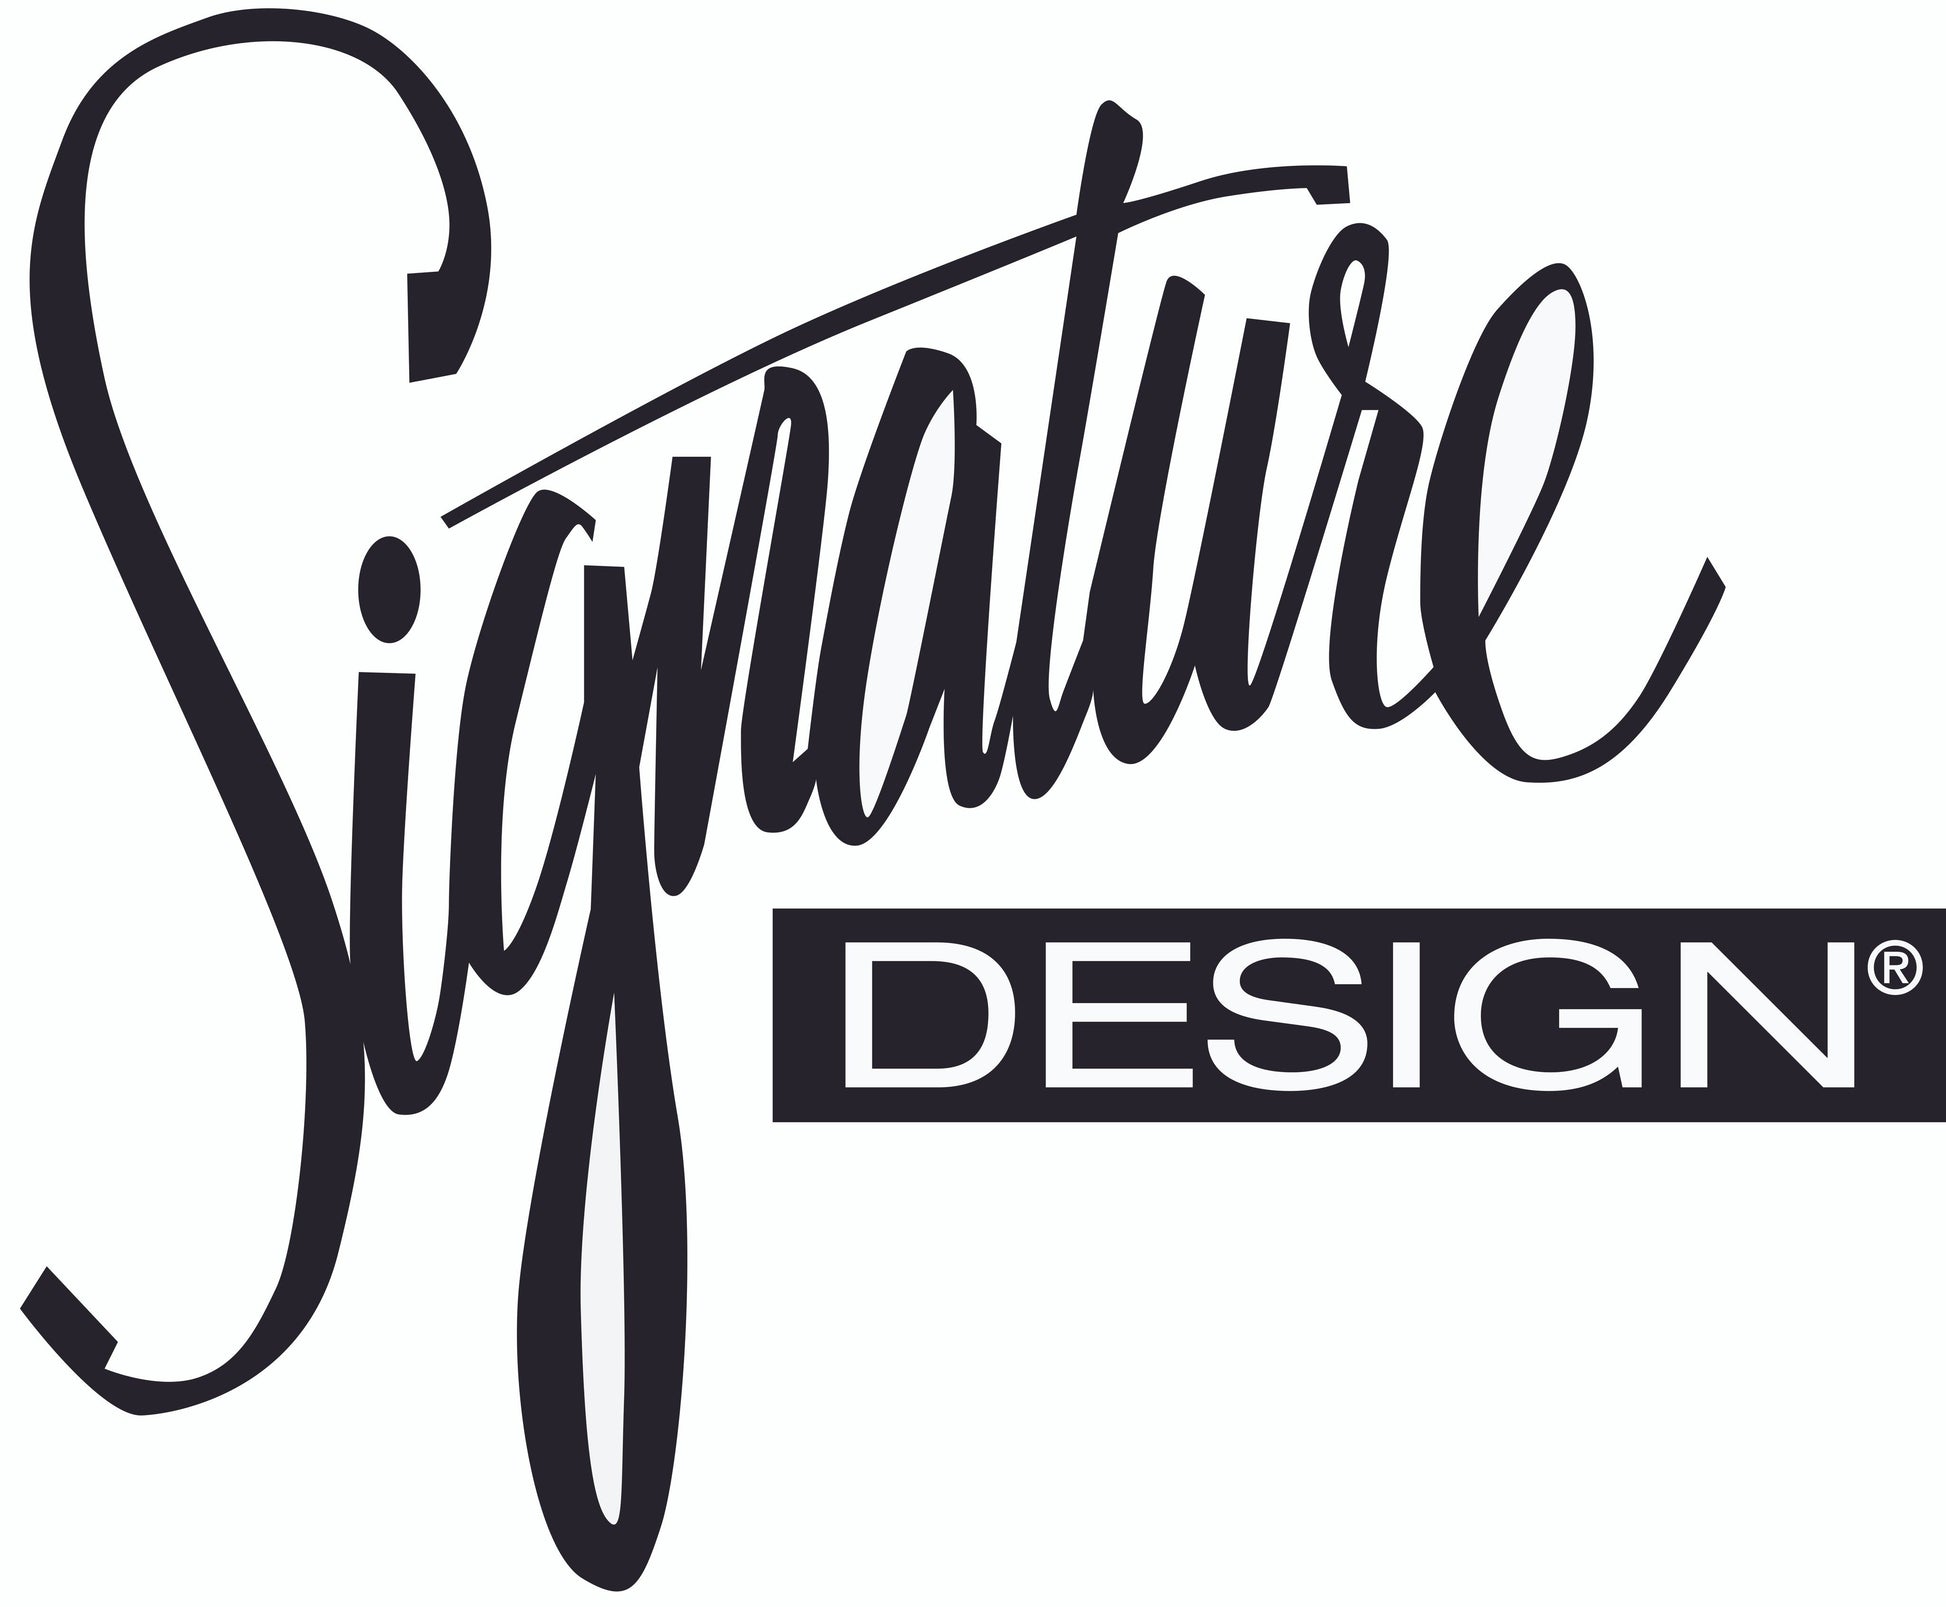 Darthurst Occasional Table Set (3/CN) Signature Design by Ashley®